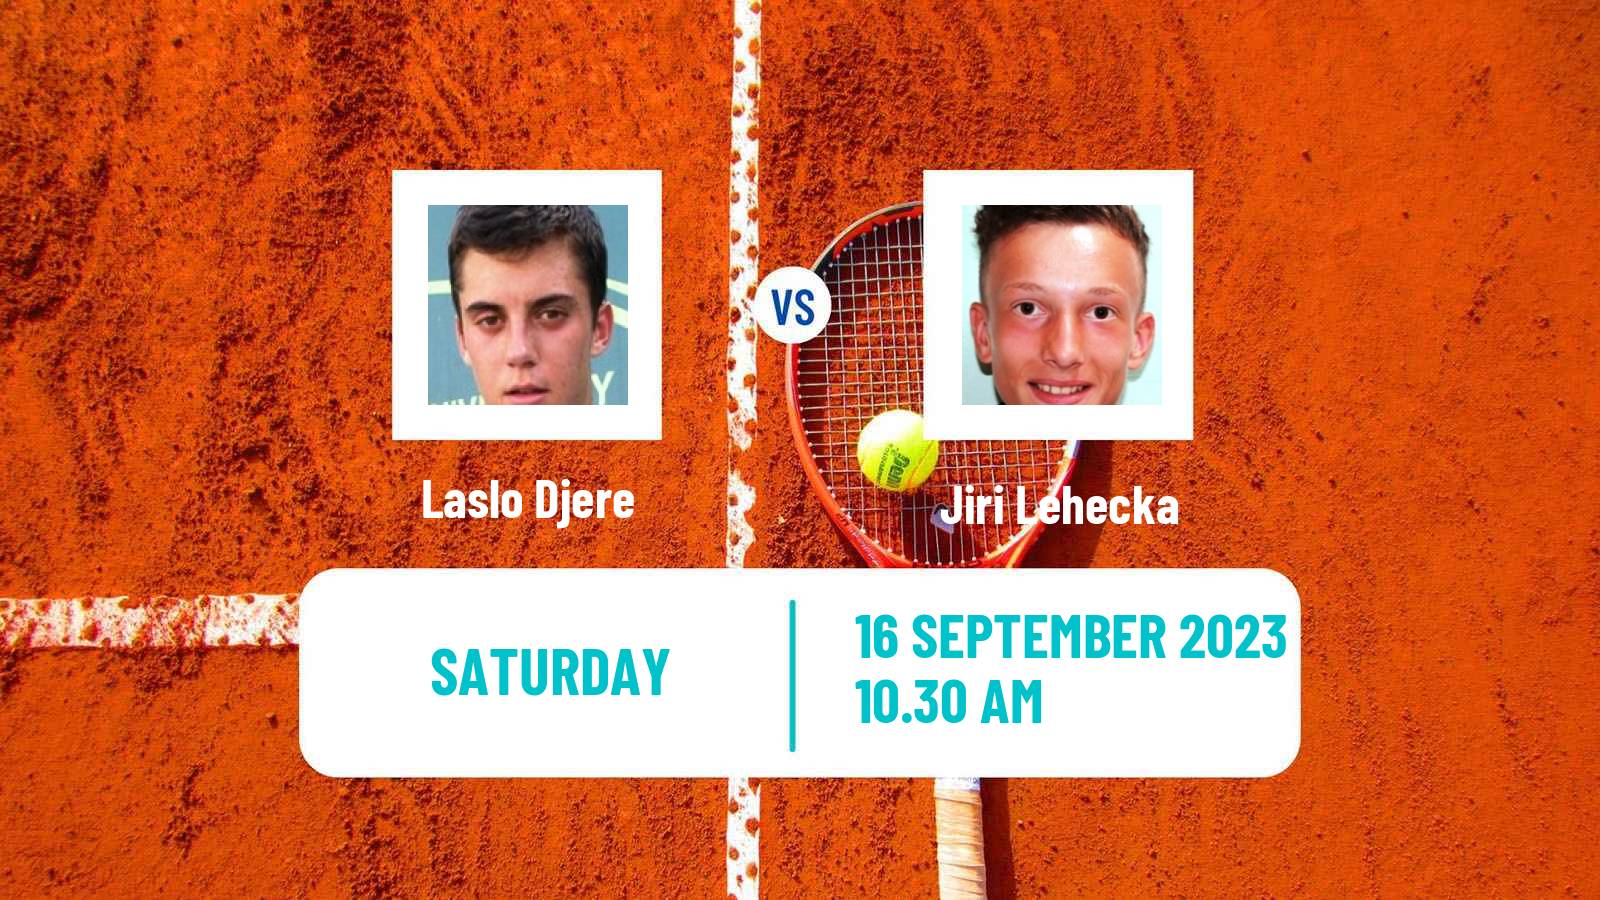 Tennis Davis Cup World Group Laslo Djere - Jiri Lehecka